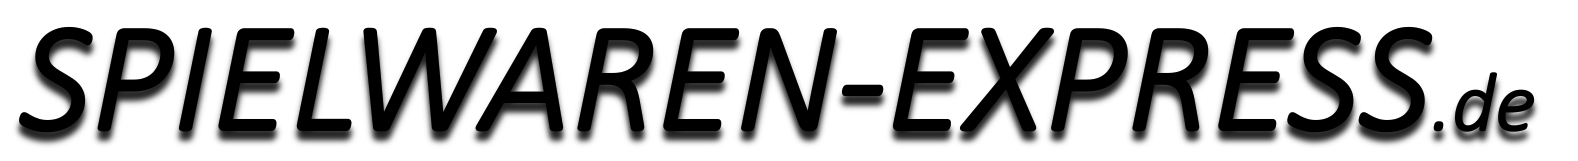 Spielwaren Express-Logo